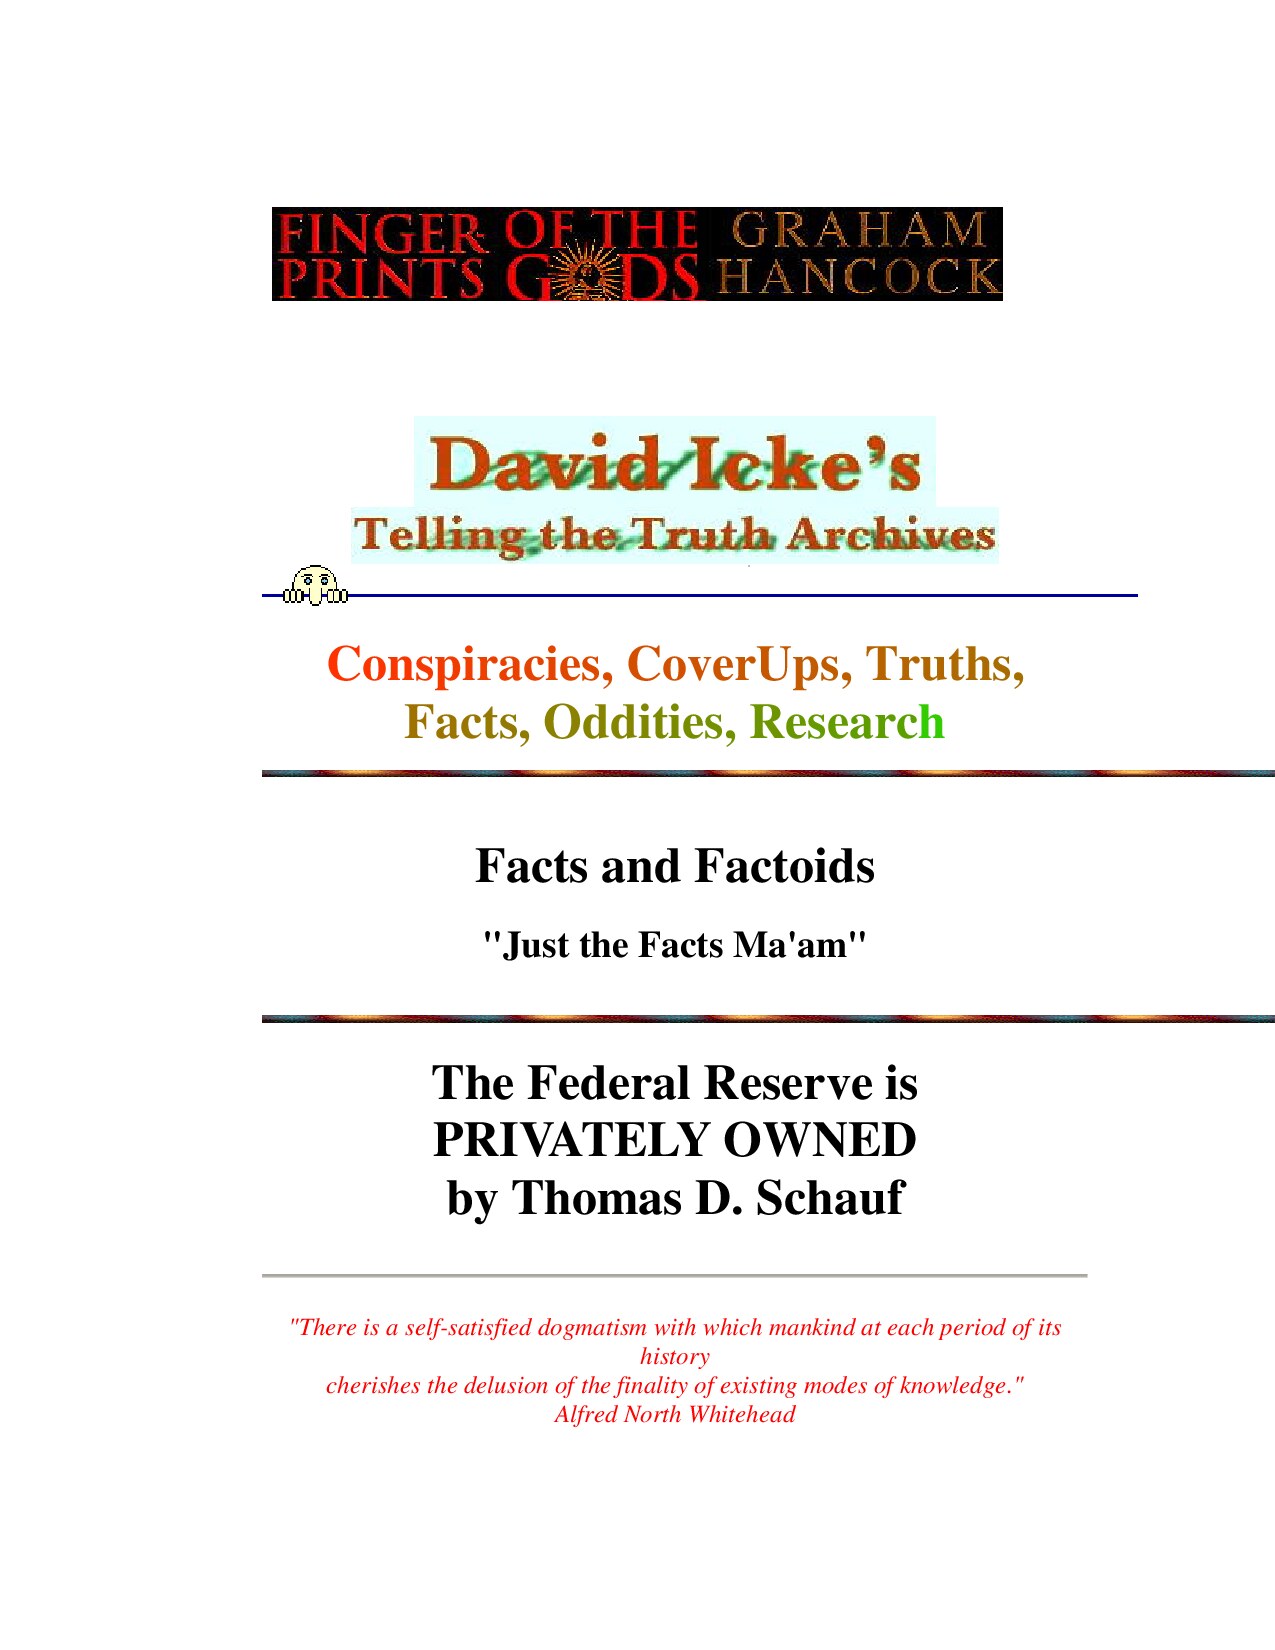 Microsoft Word - David Icke - Federal Reserve System Fraud.doc